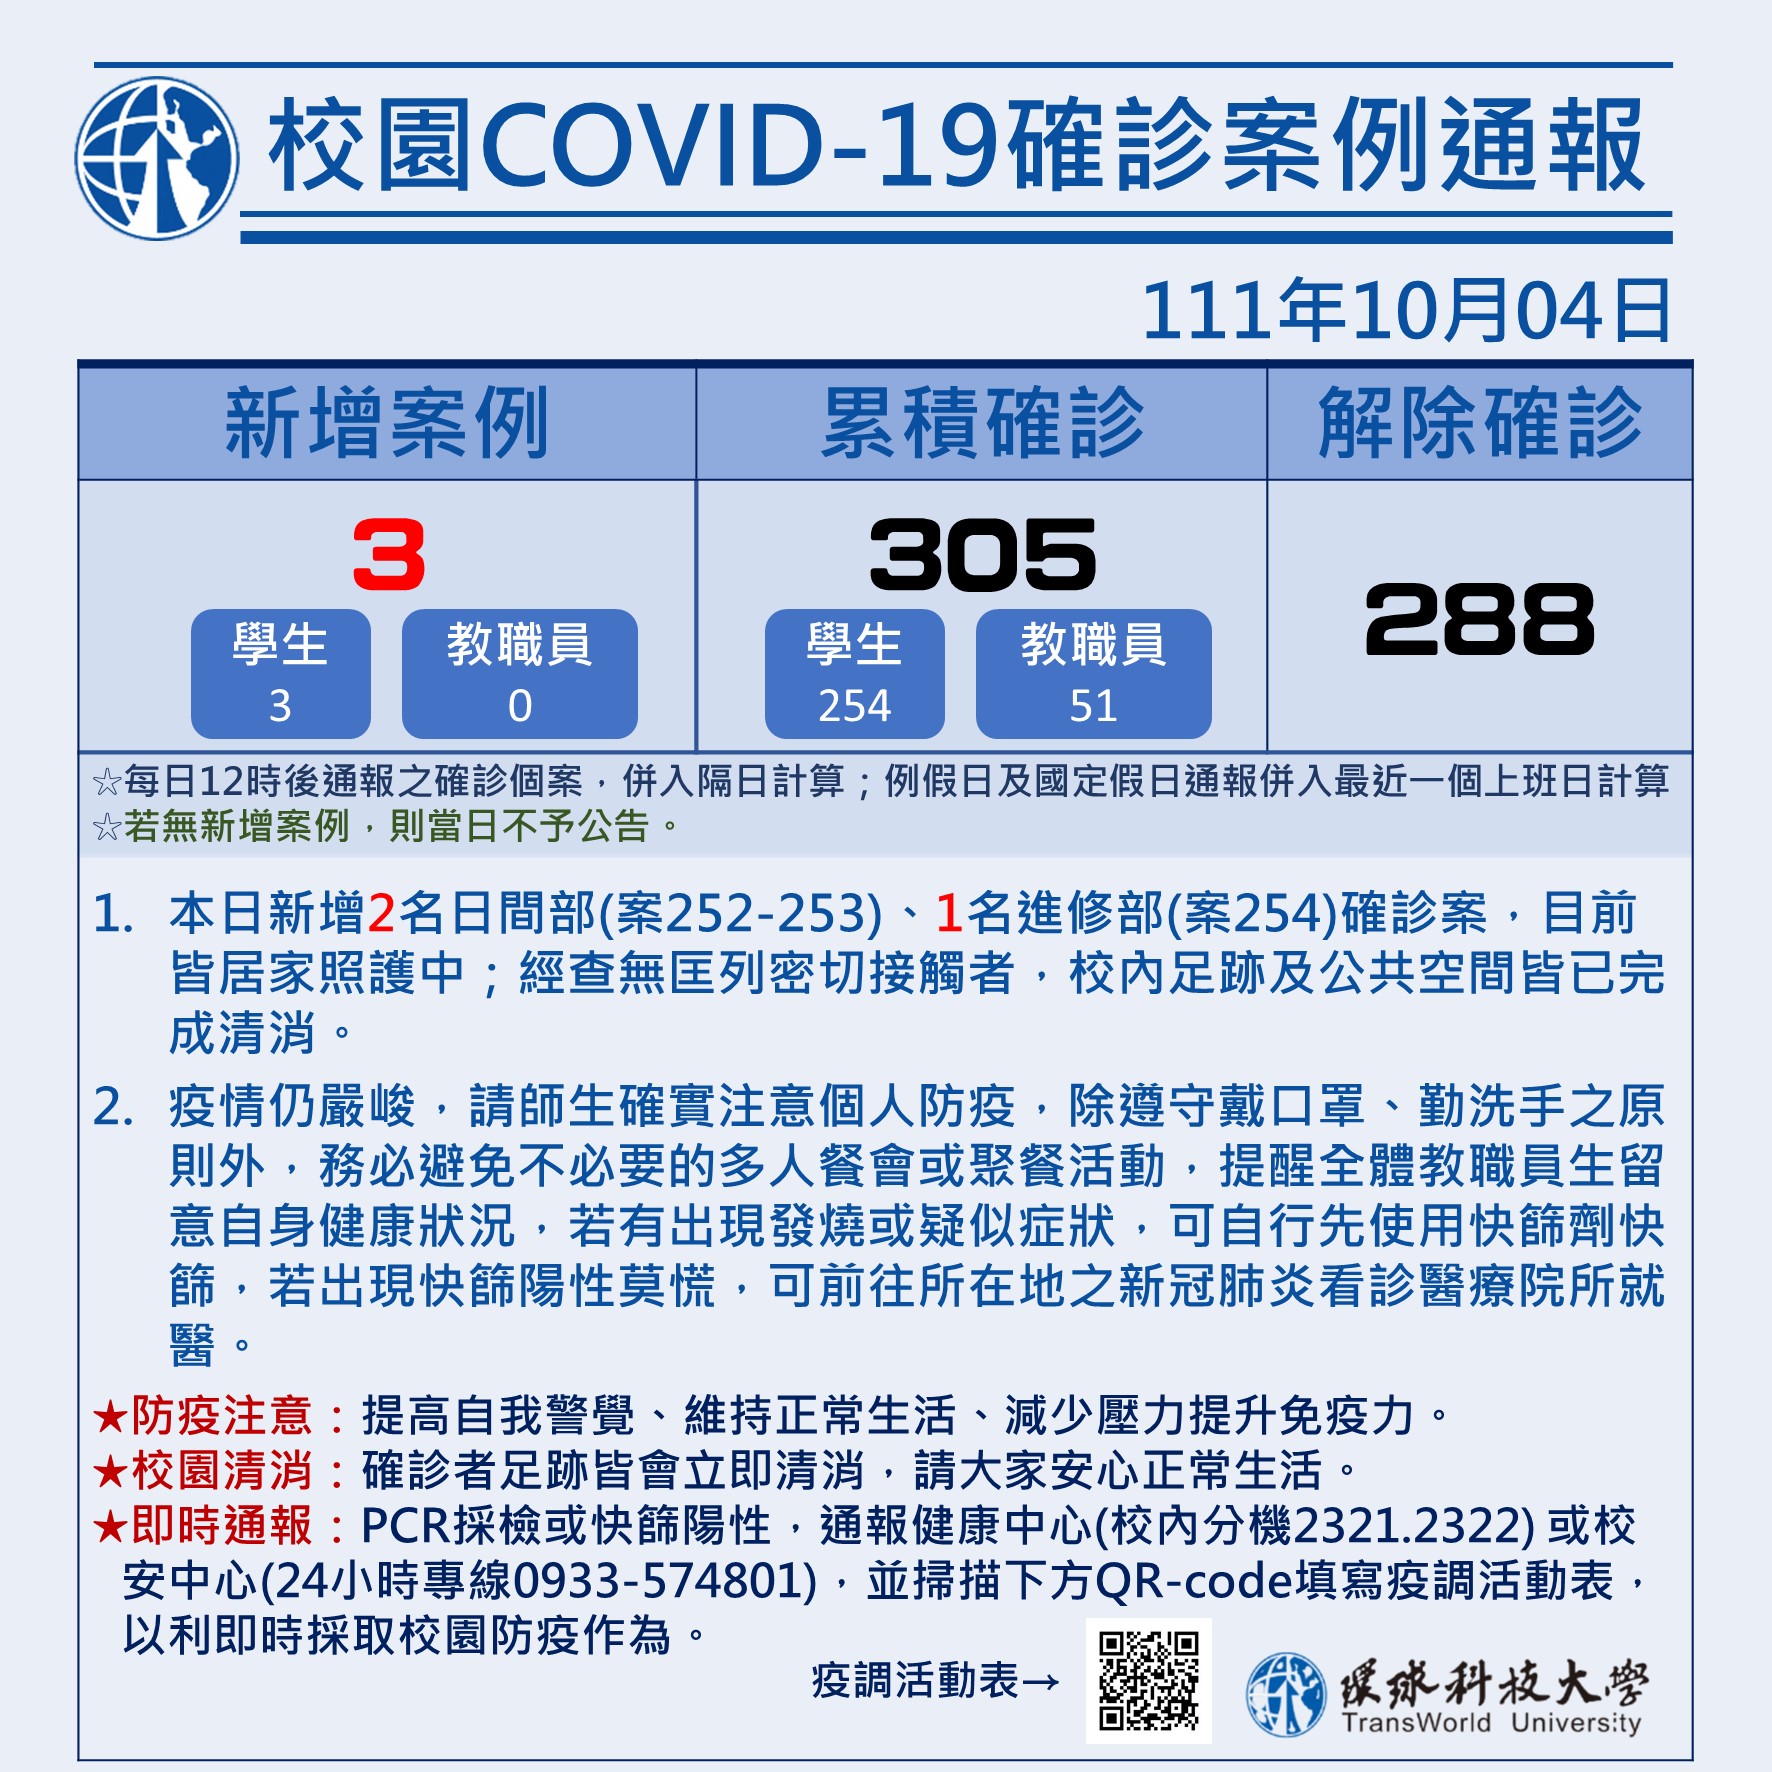 校園COVID-19案例統計1004